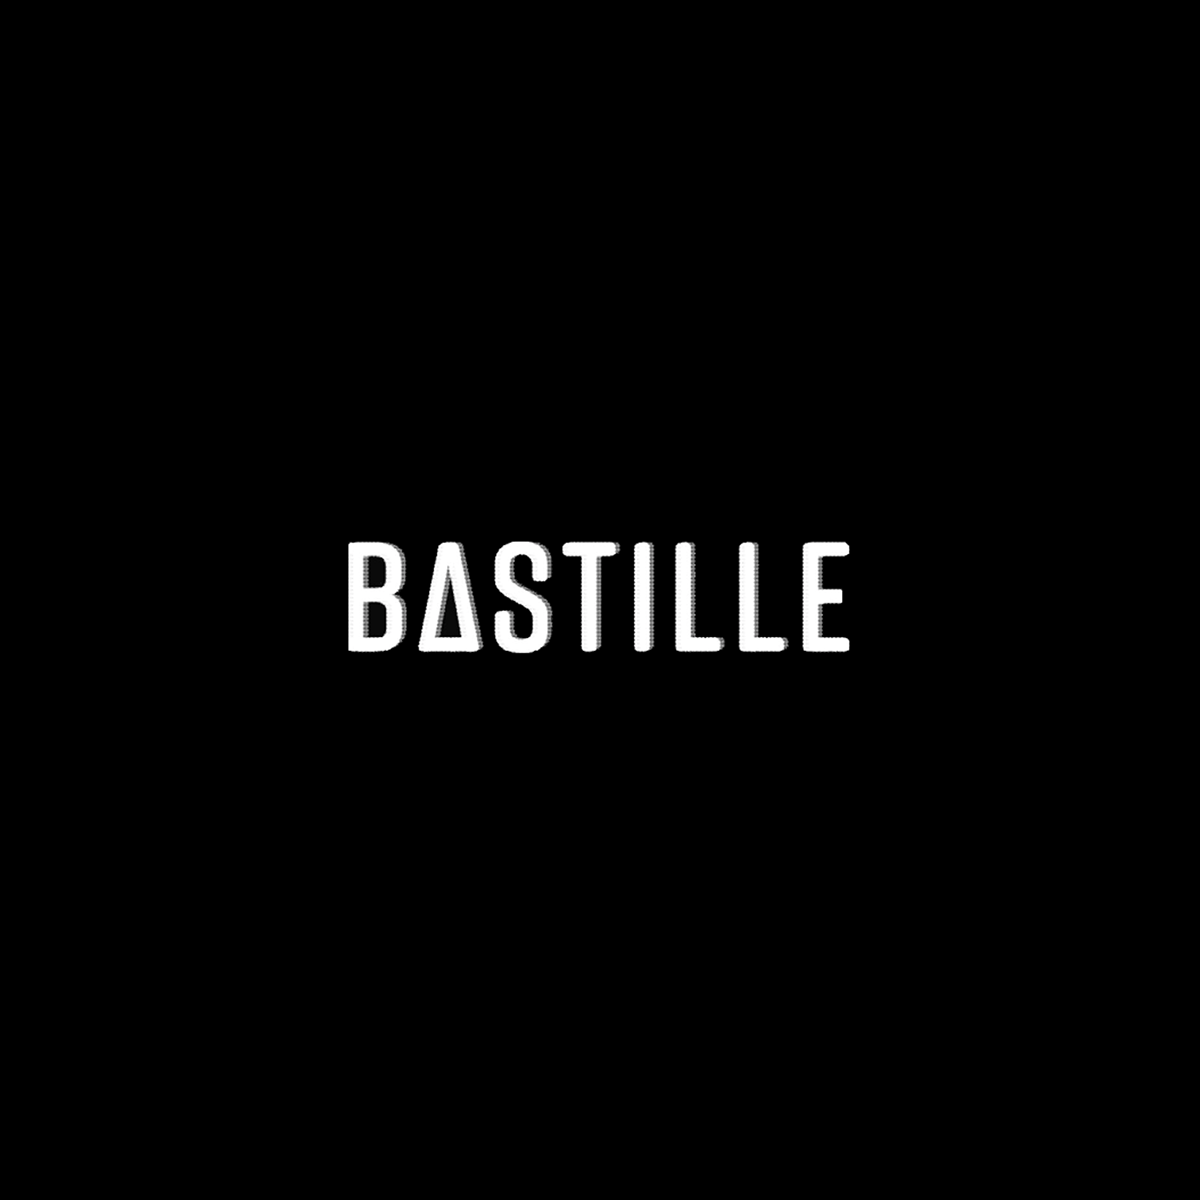 Bastille Black and White Logo - Bastille (Last Updated: 18 11 2018)